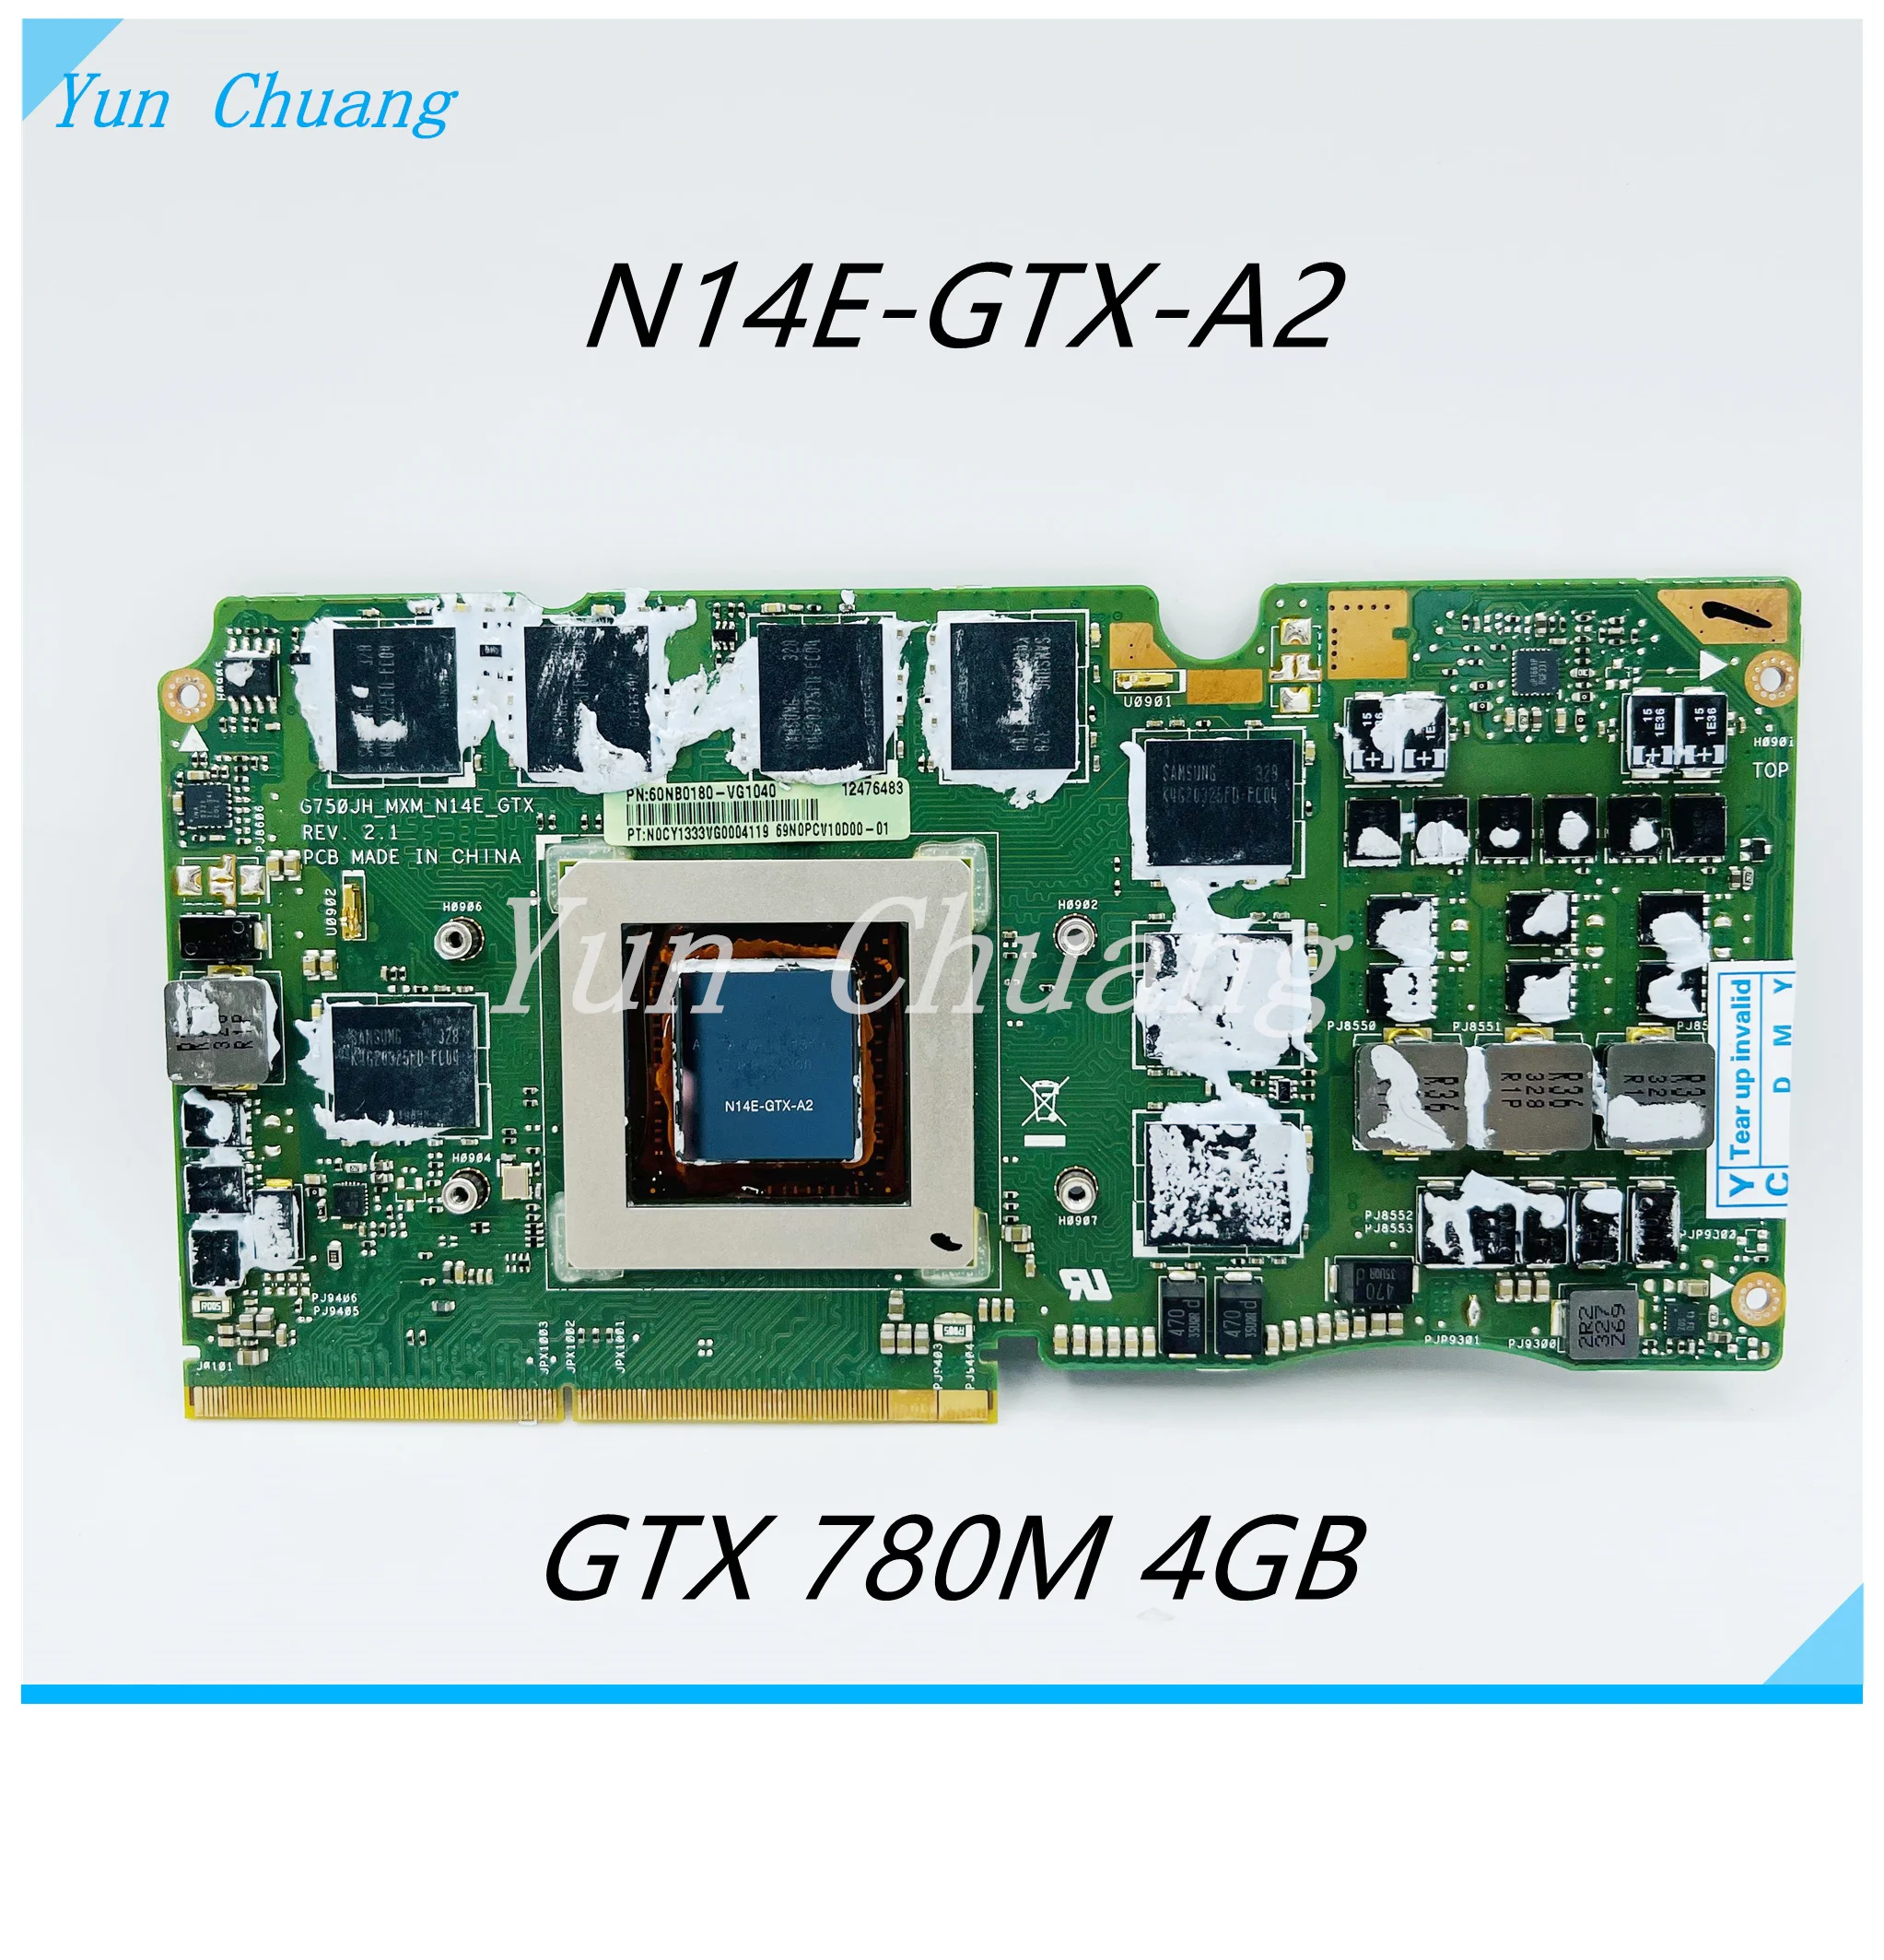 Лаптоп Asus ROG G750JH-BL карта G750J G750JH N14E-GTX-A2 GeForce GTX 780M 4 GB VGA Графична карта Видеокарта 60NB0180-VG10400